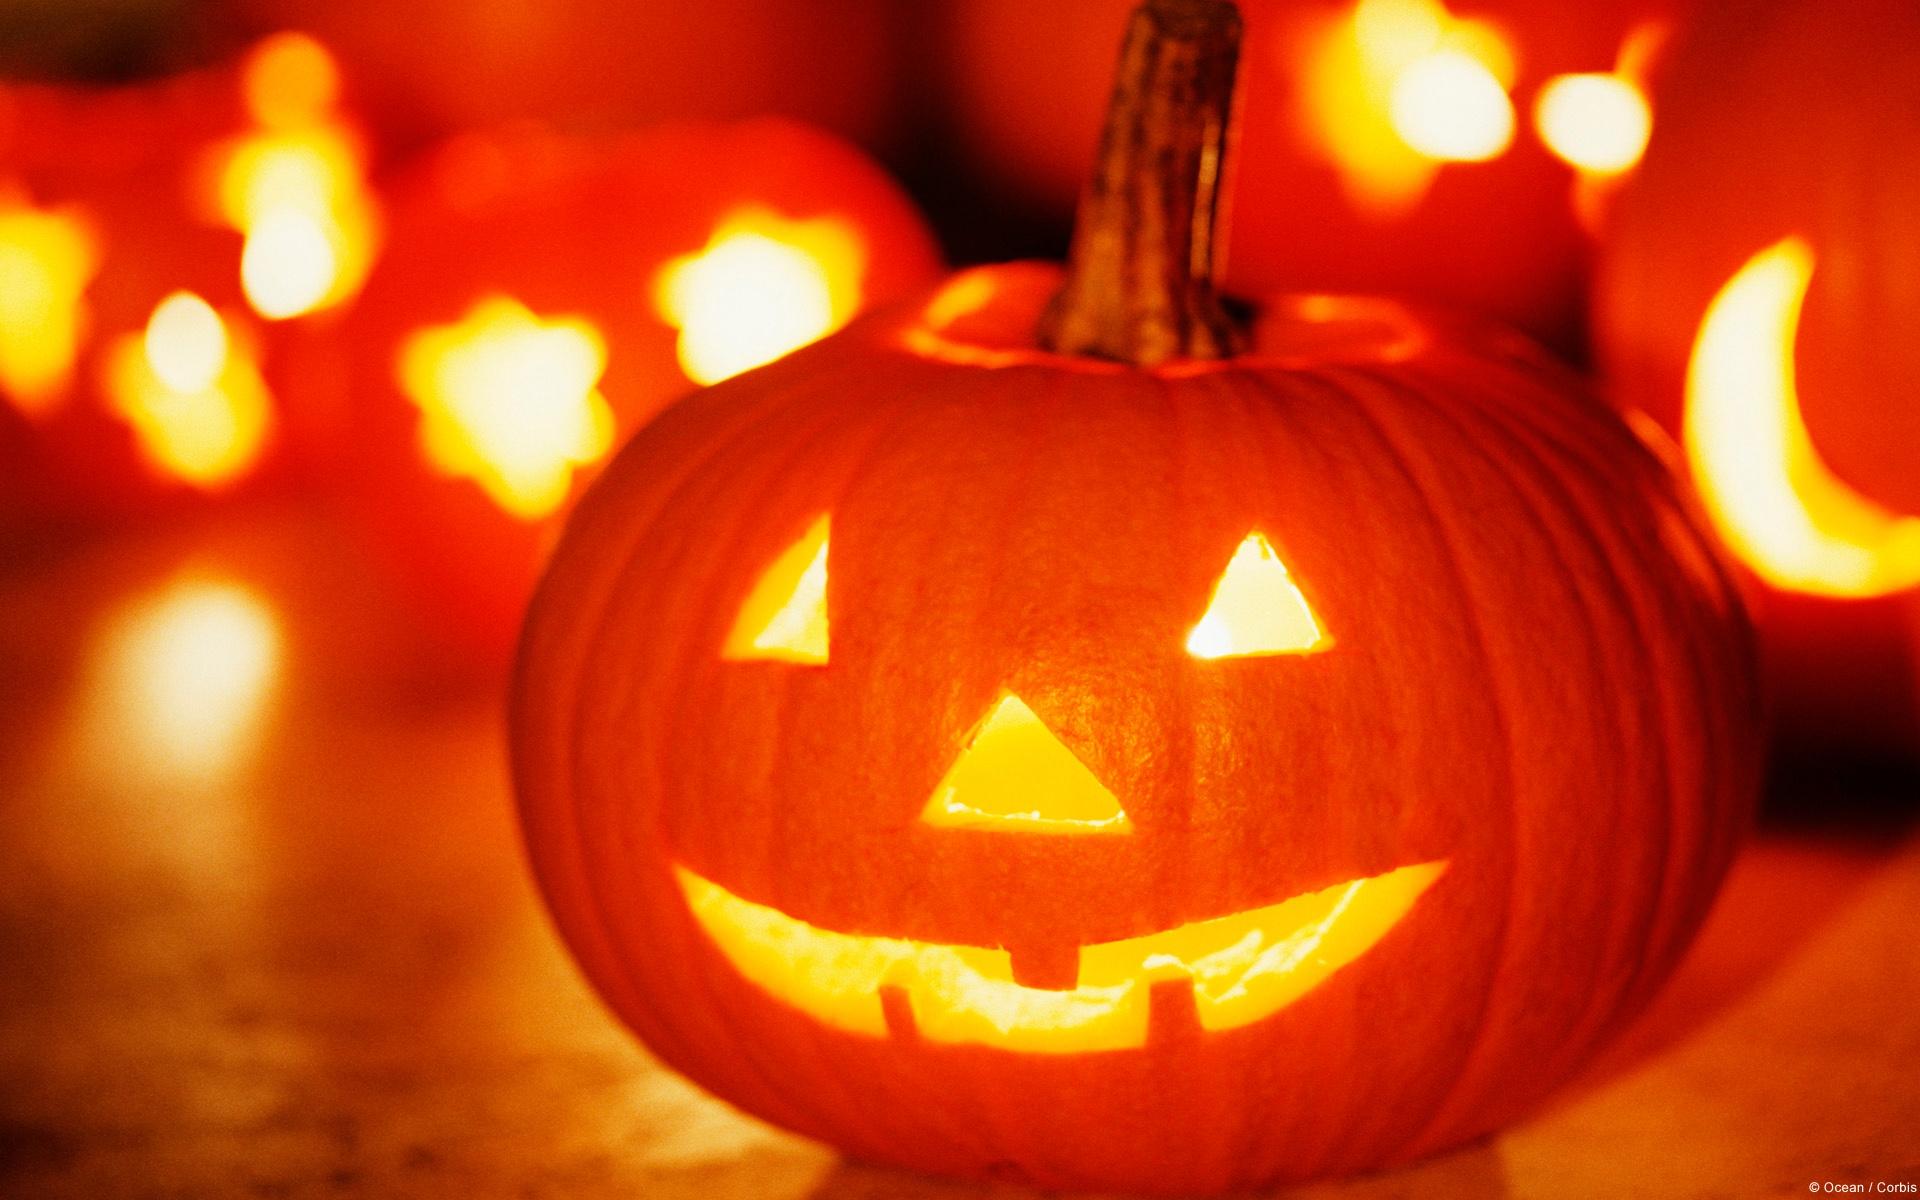 Halloween Jack O Lantern Wallpaper in jpg format for free download